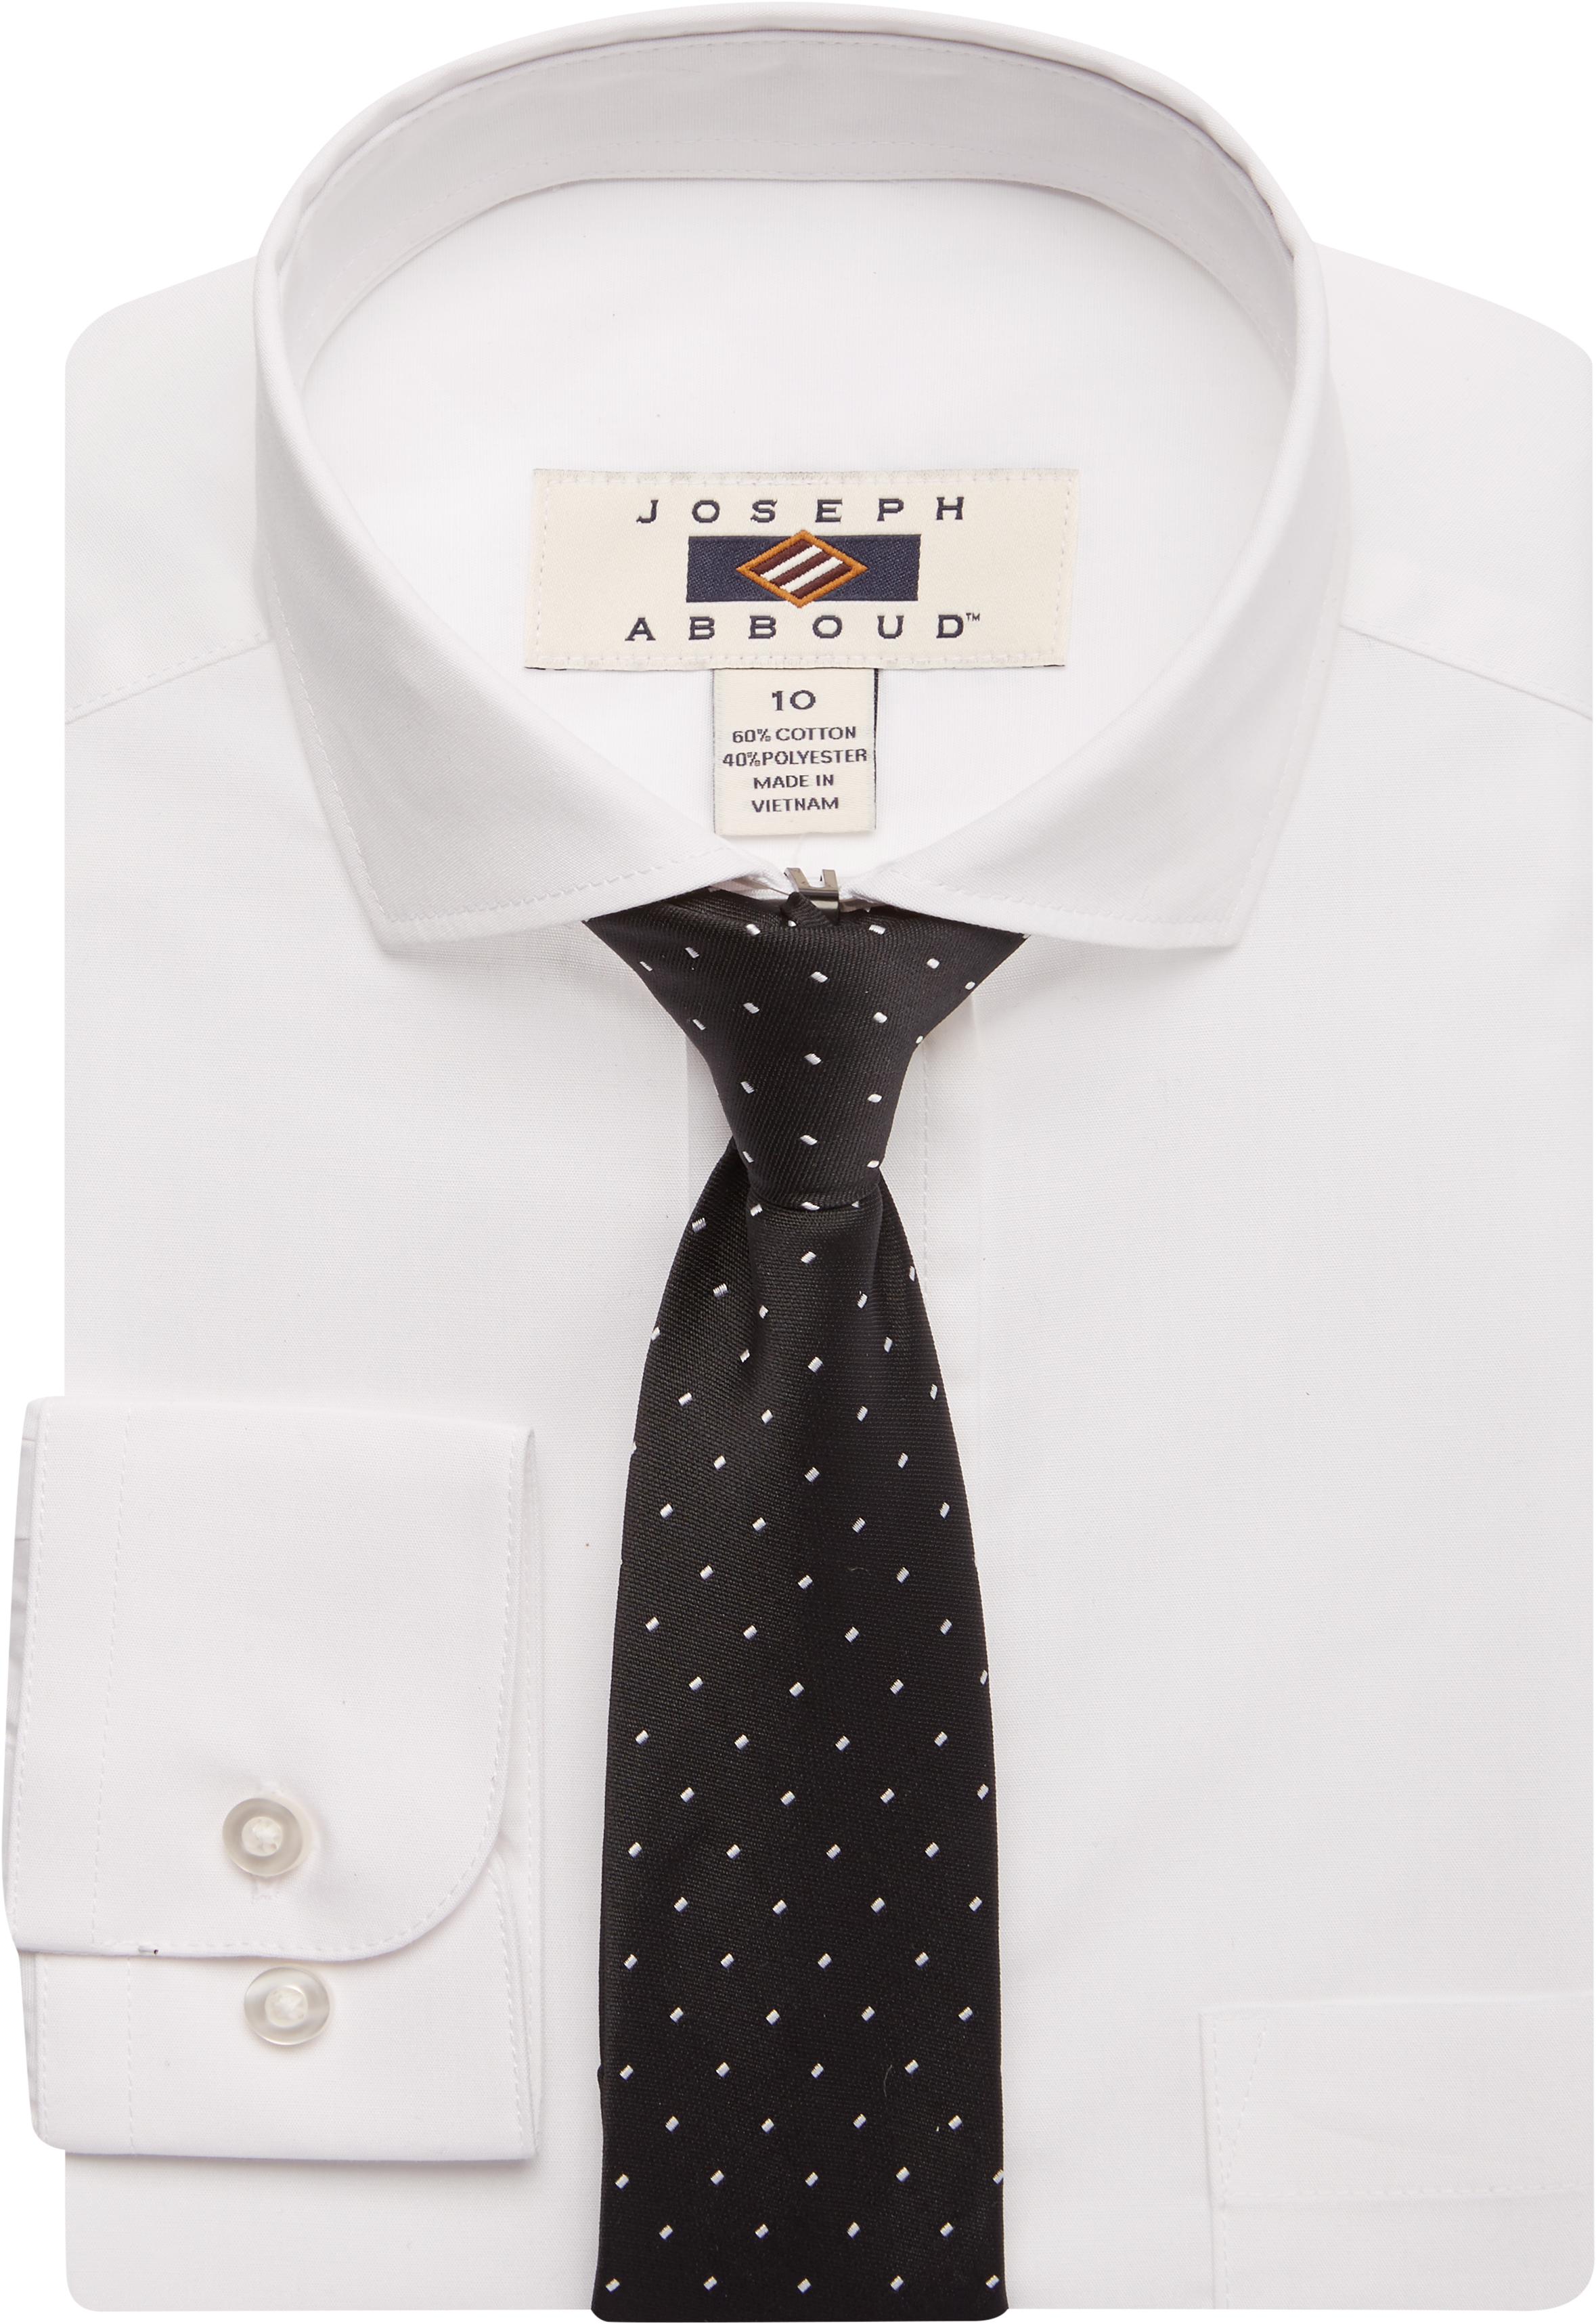 Shirt ☀ Tie Sets Shirts | Men's Wearhouse